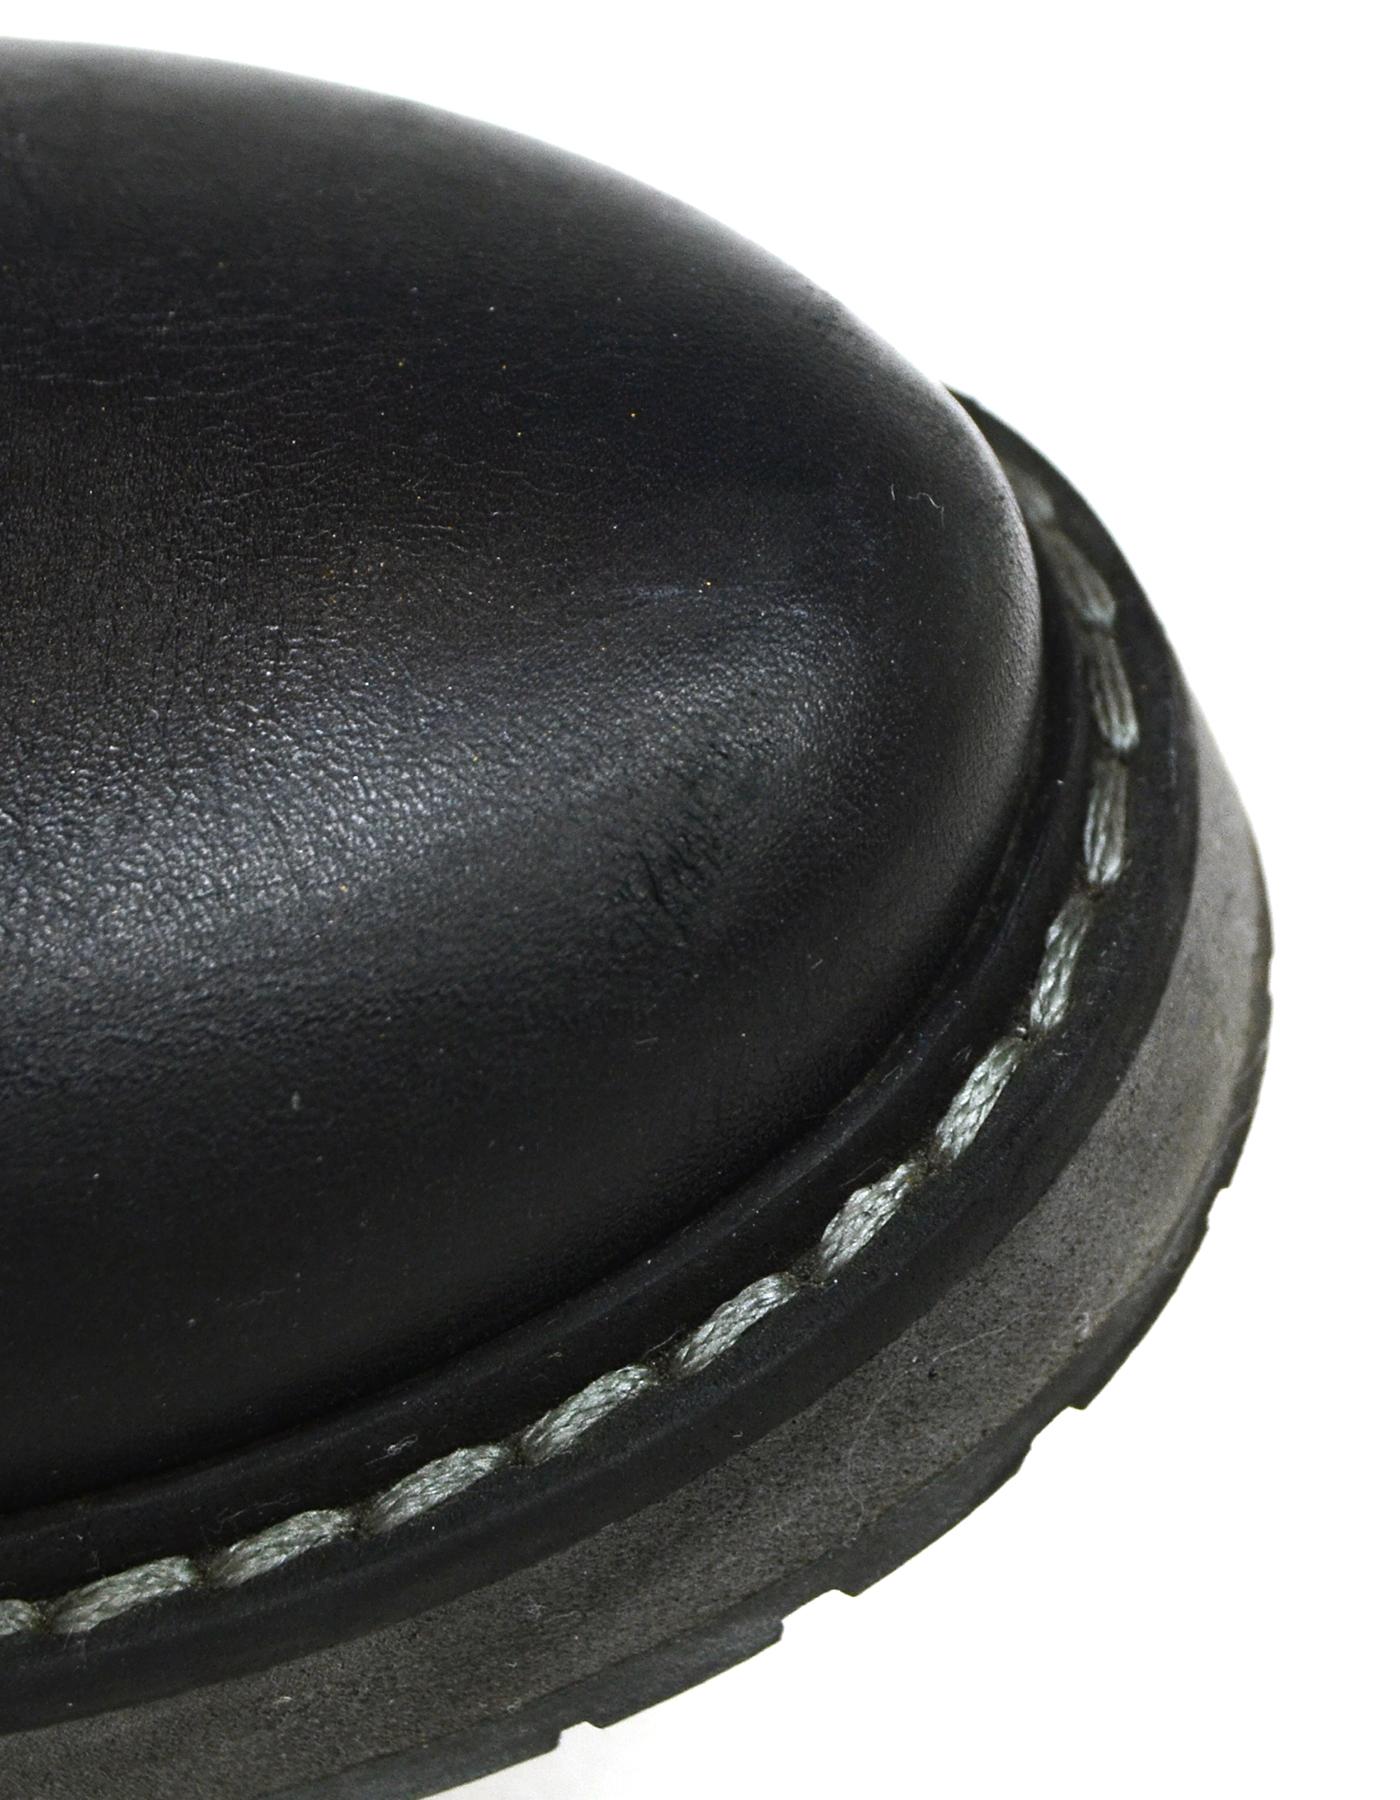 Fendi Black Leather Concealed Wedge Boot sz 38.5 3